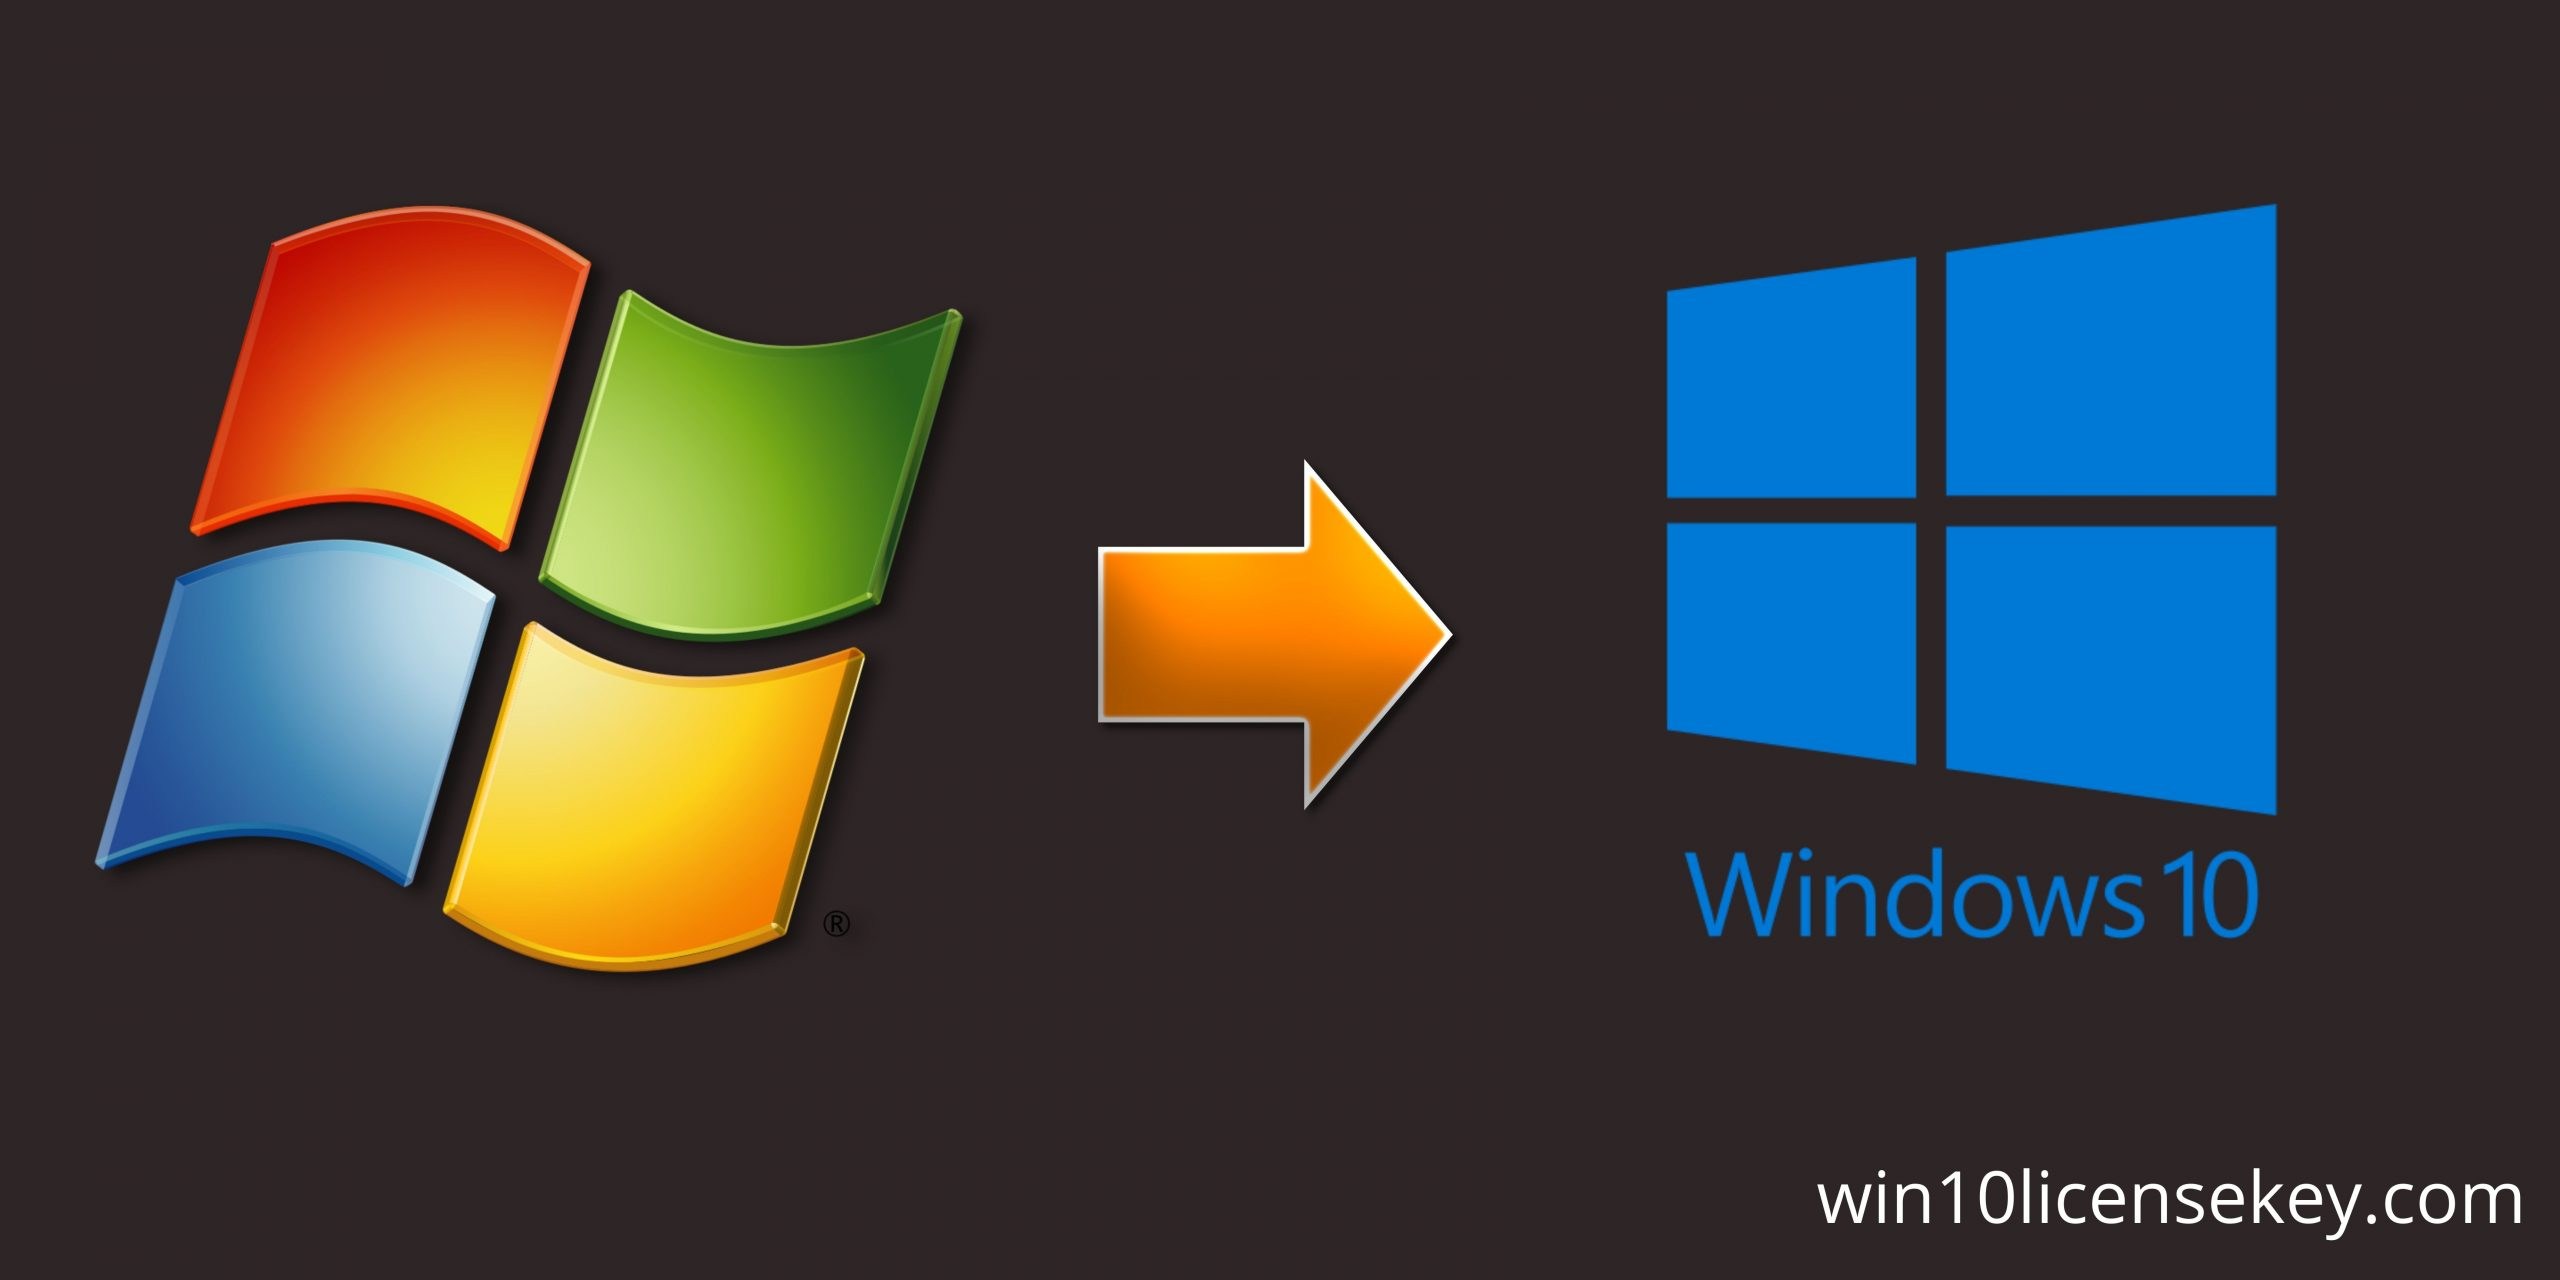 Free Upgrade To Windows 10 From Windows 7